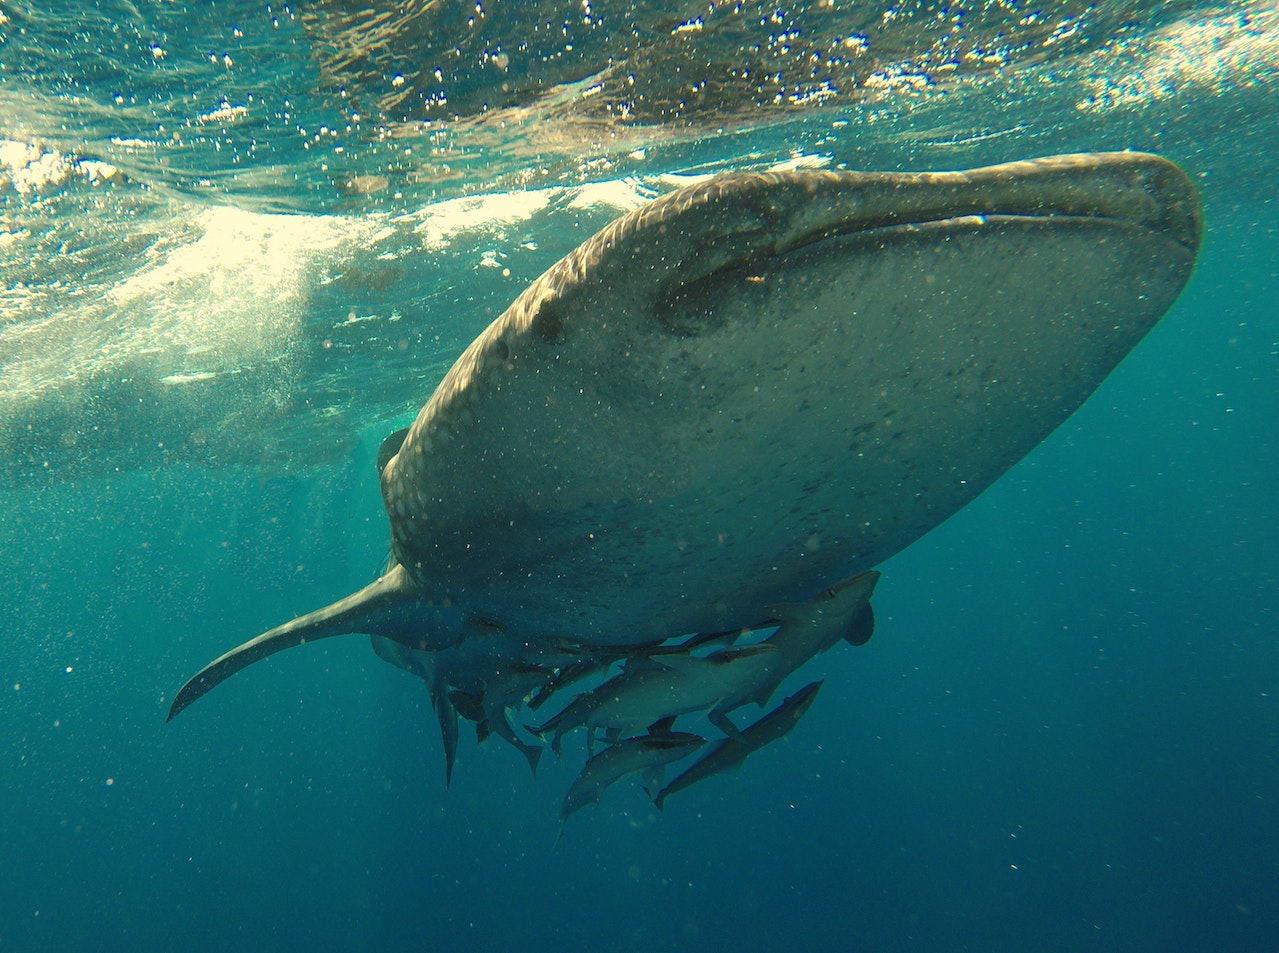 Whaleshark Underwater